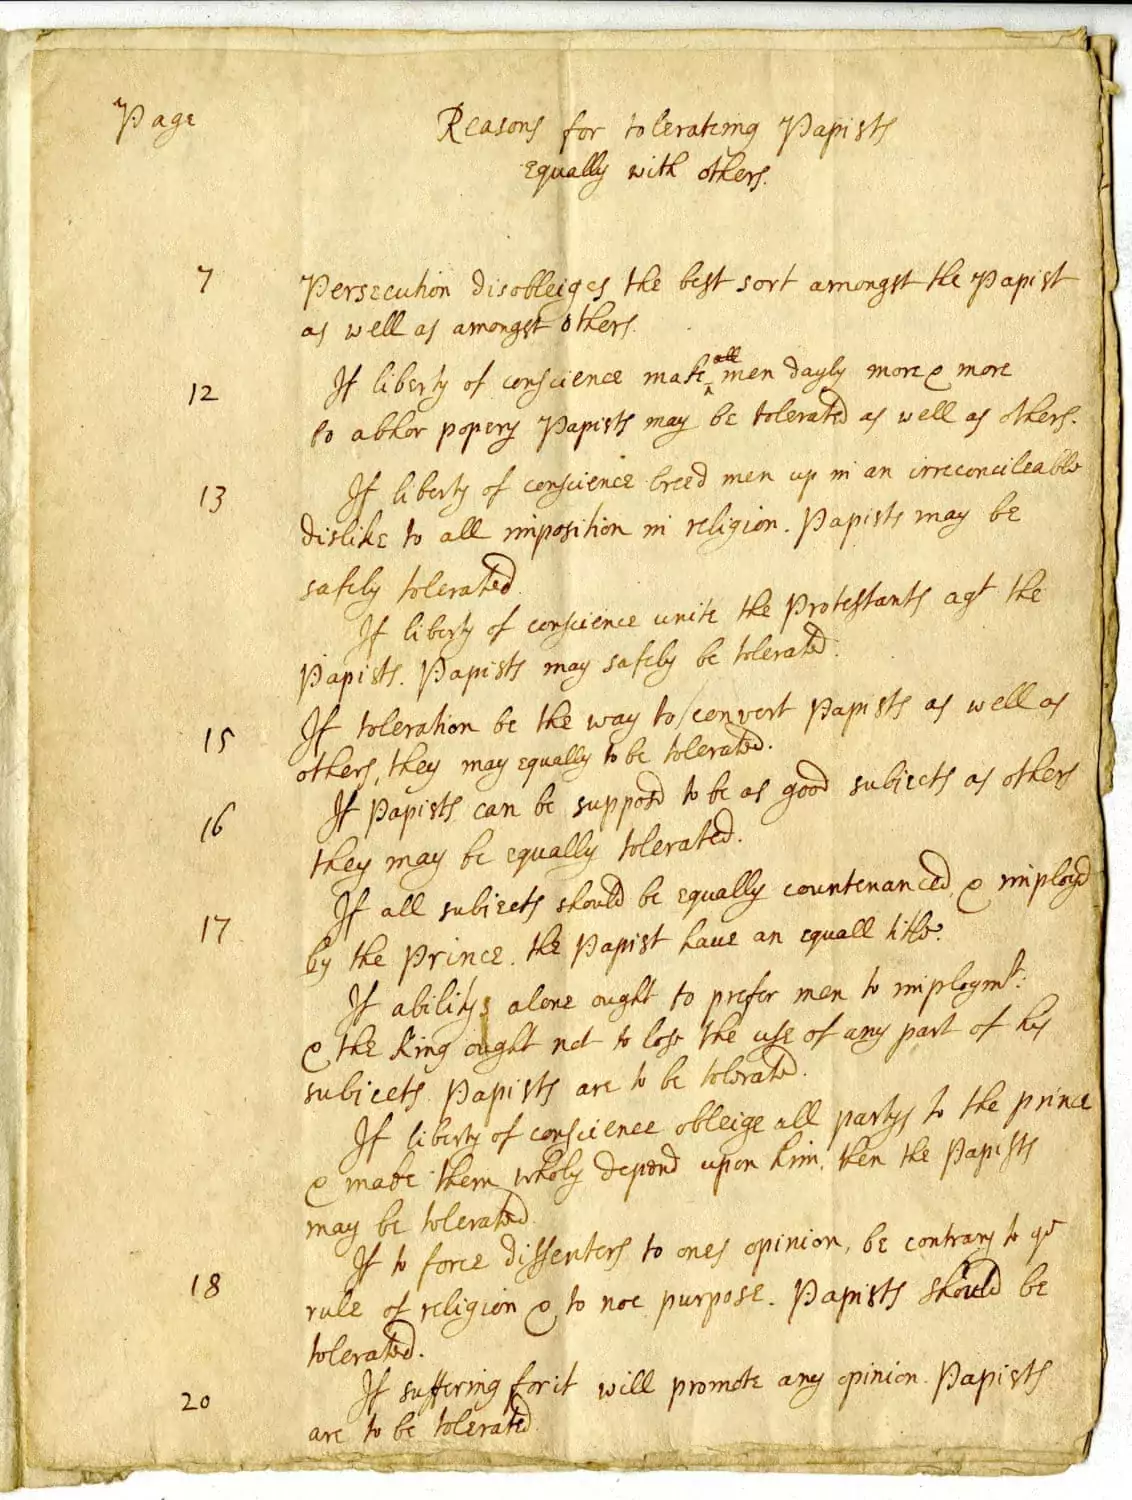 Recently discovered John Locke manuscript